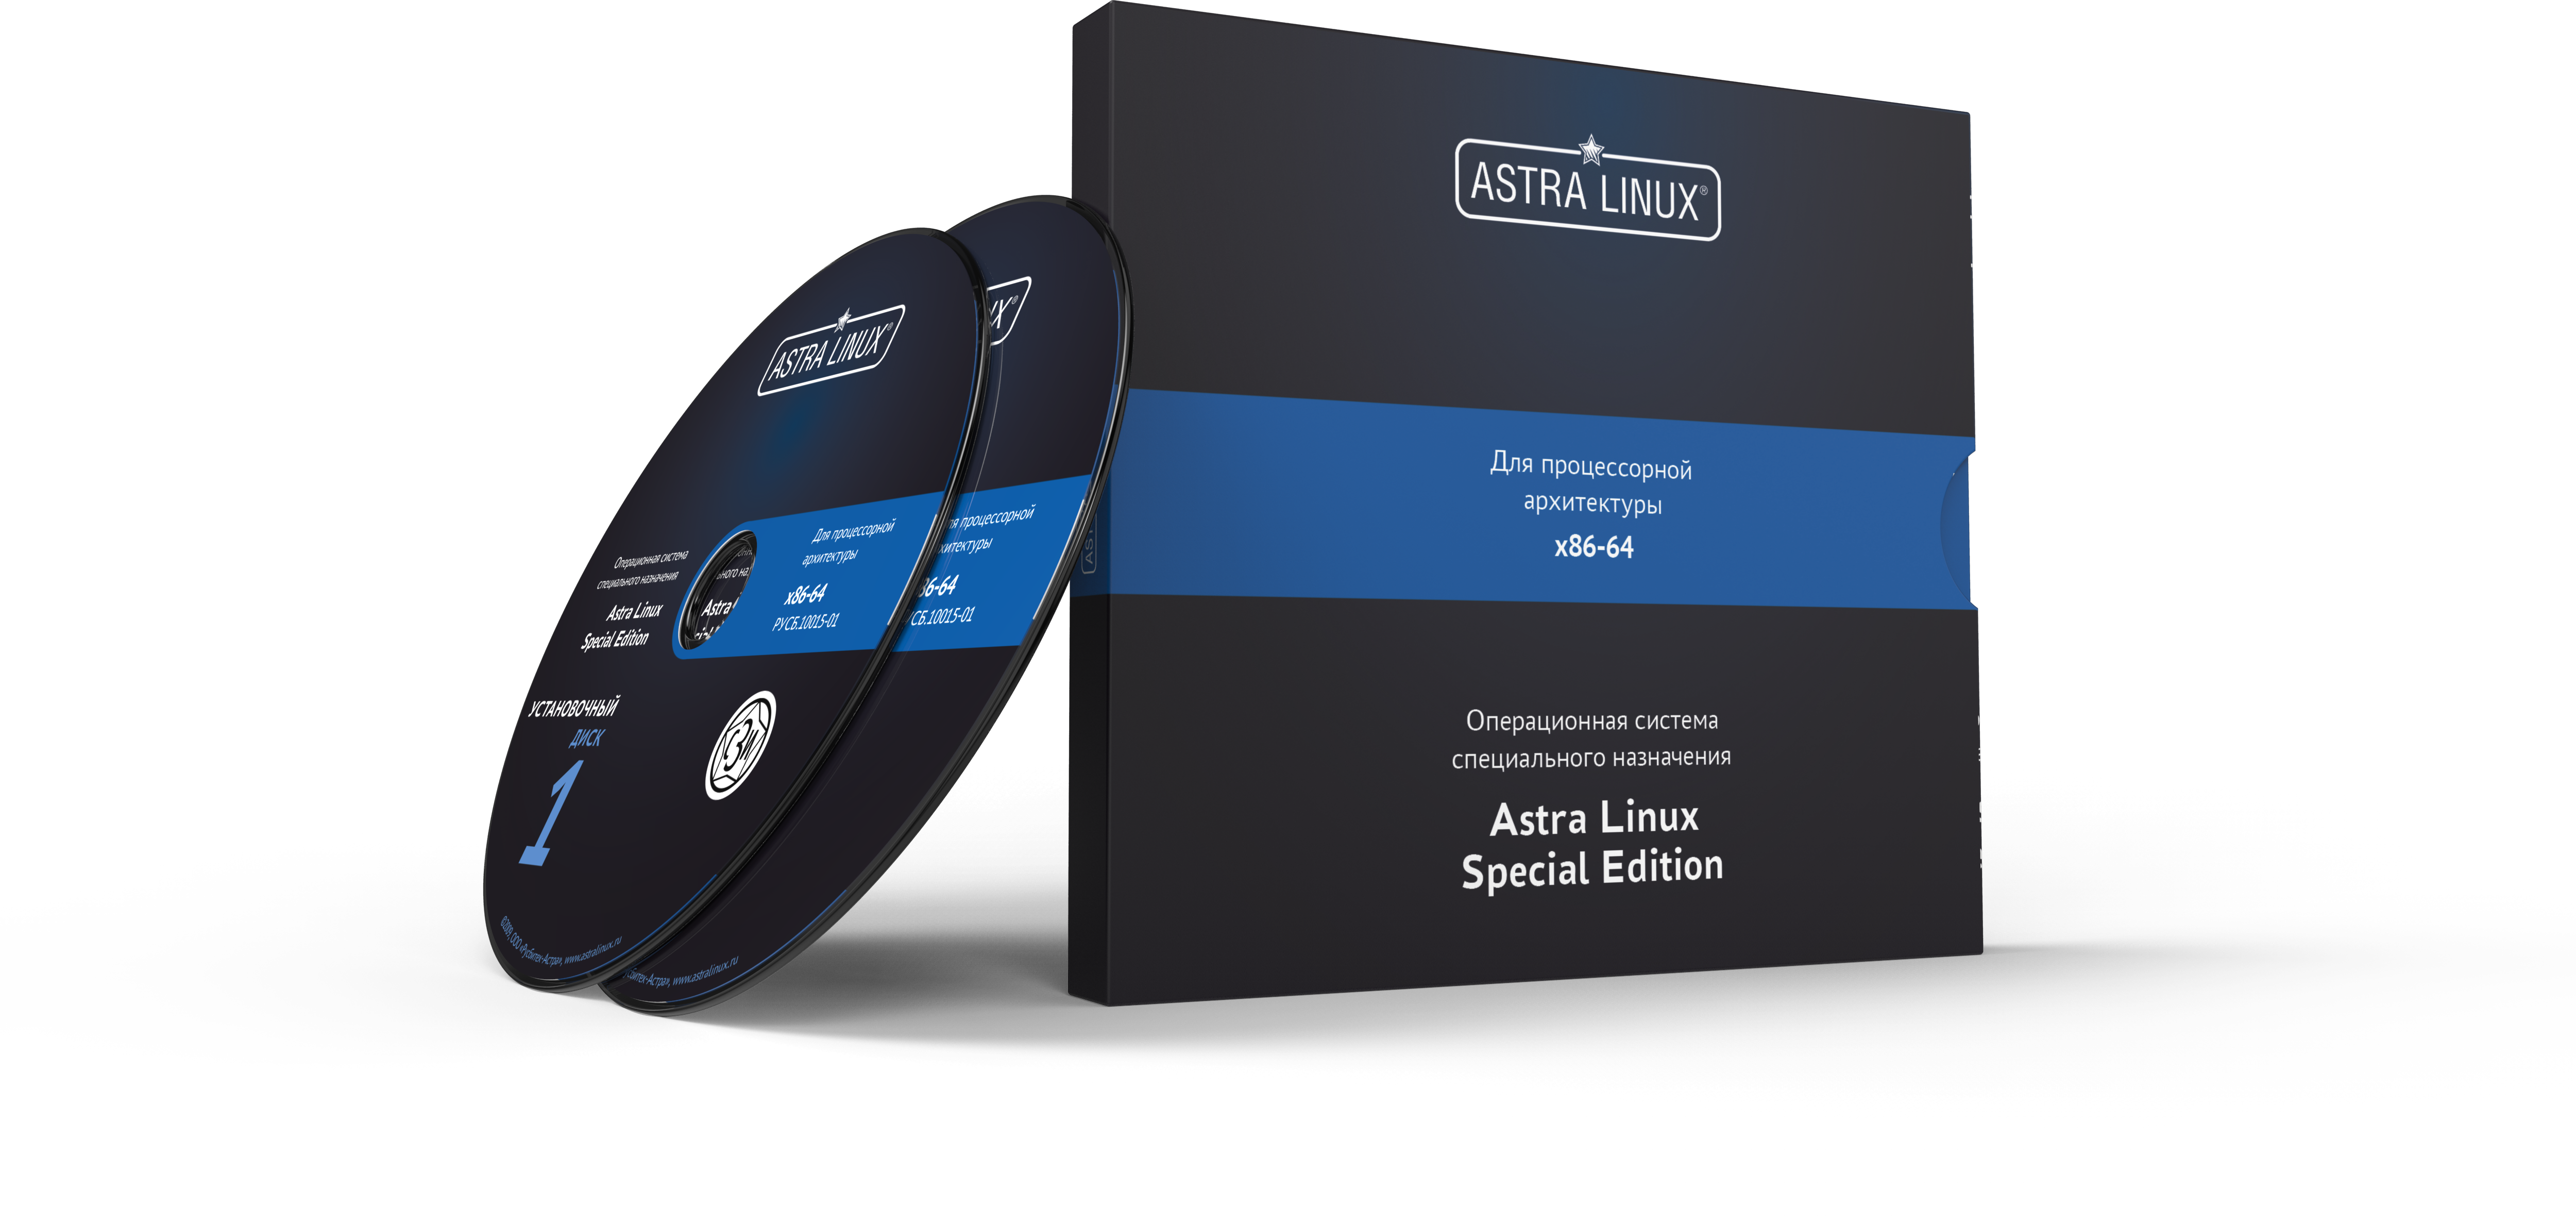 Astra Linux Special Edition 1.7 - Воронеж, диск, "Усиленный", 12 мес., ТП "Стандарт" на 12 мес.